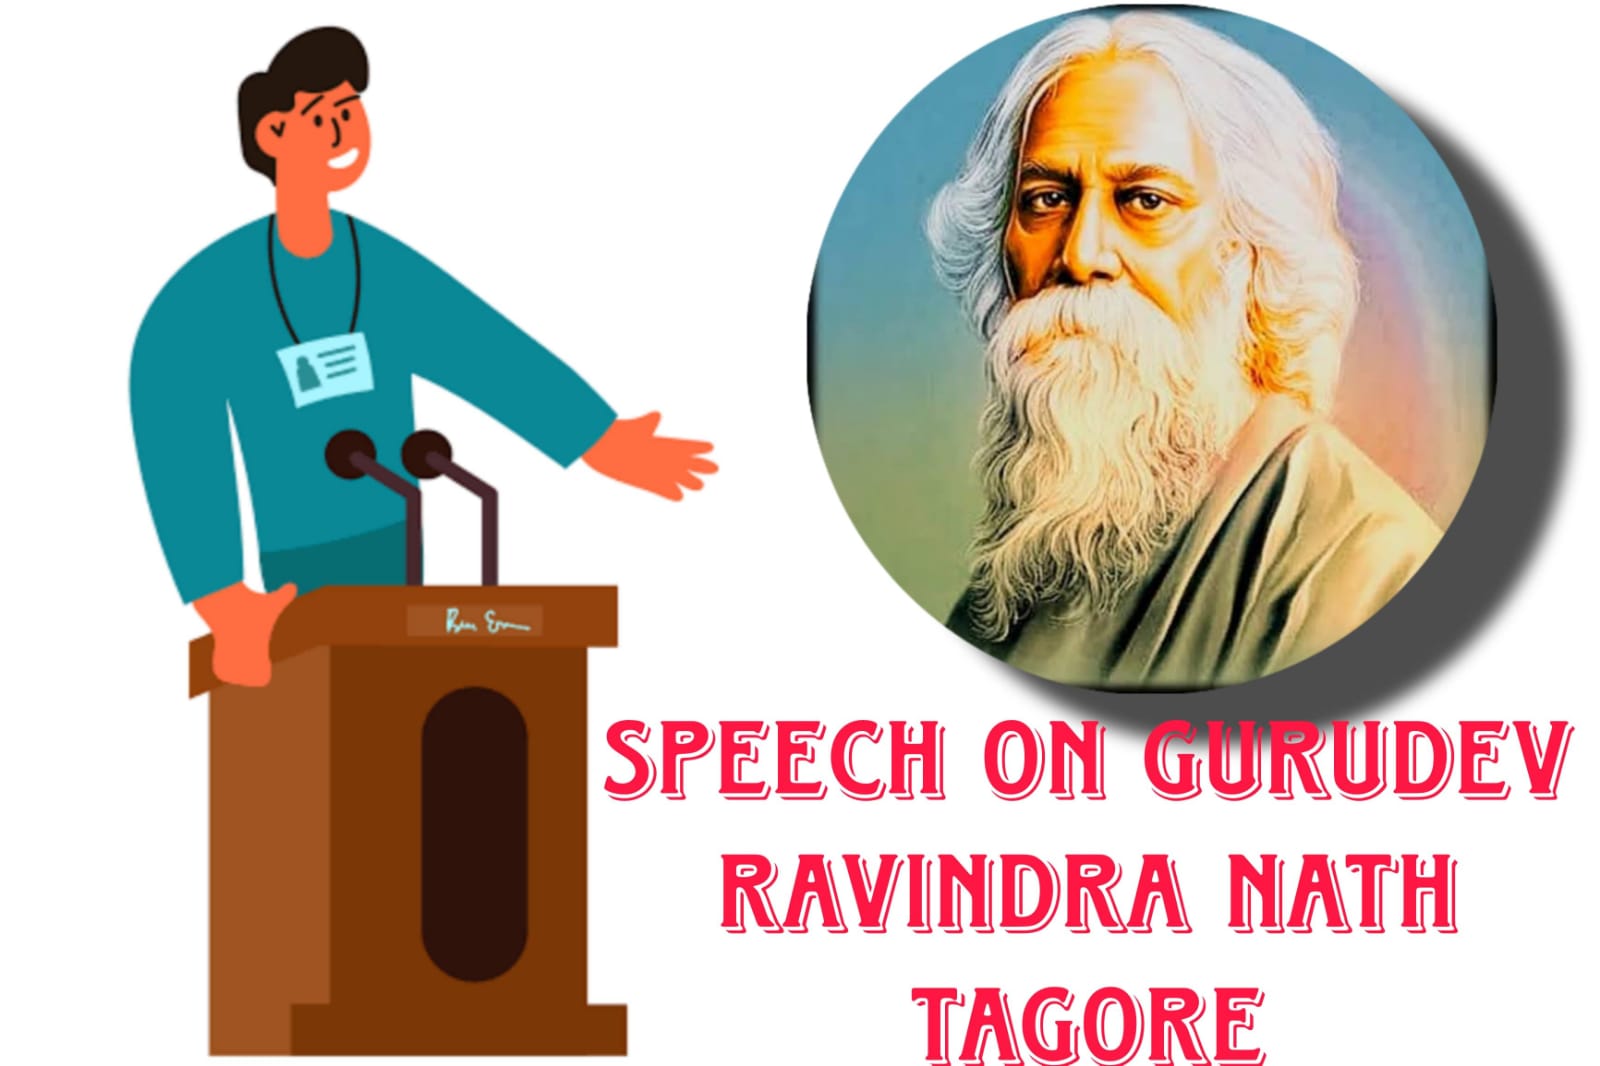 RabindranathTagore Gurudev IndianPoet NobelLaureate Writer Philosopher